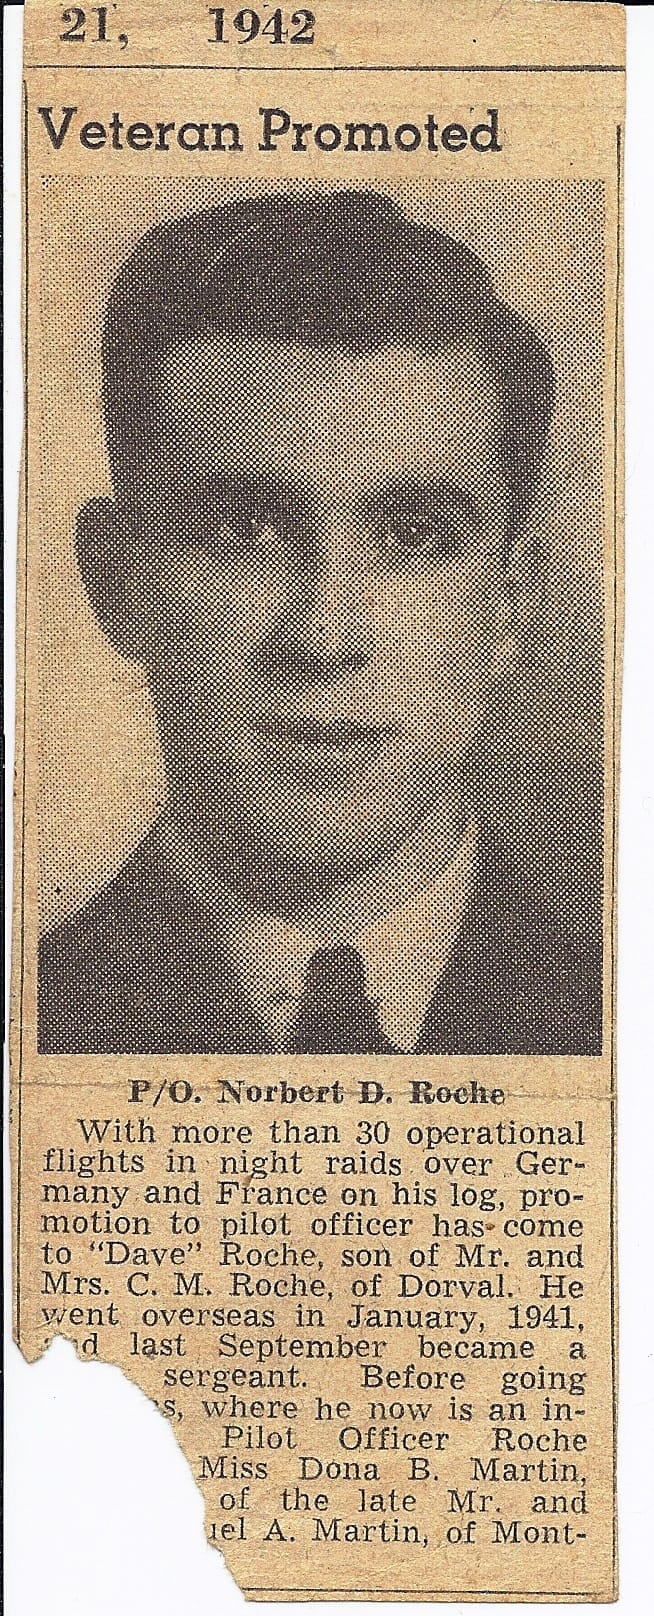 Veteran Promoted to Pilot Officer, Norbert Roche newspaper announcement, 1942